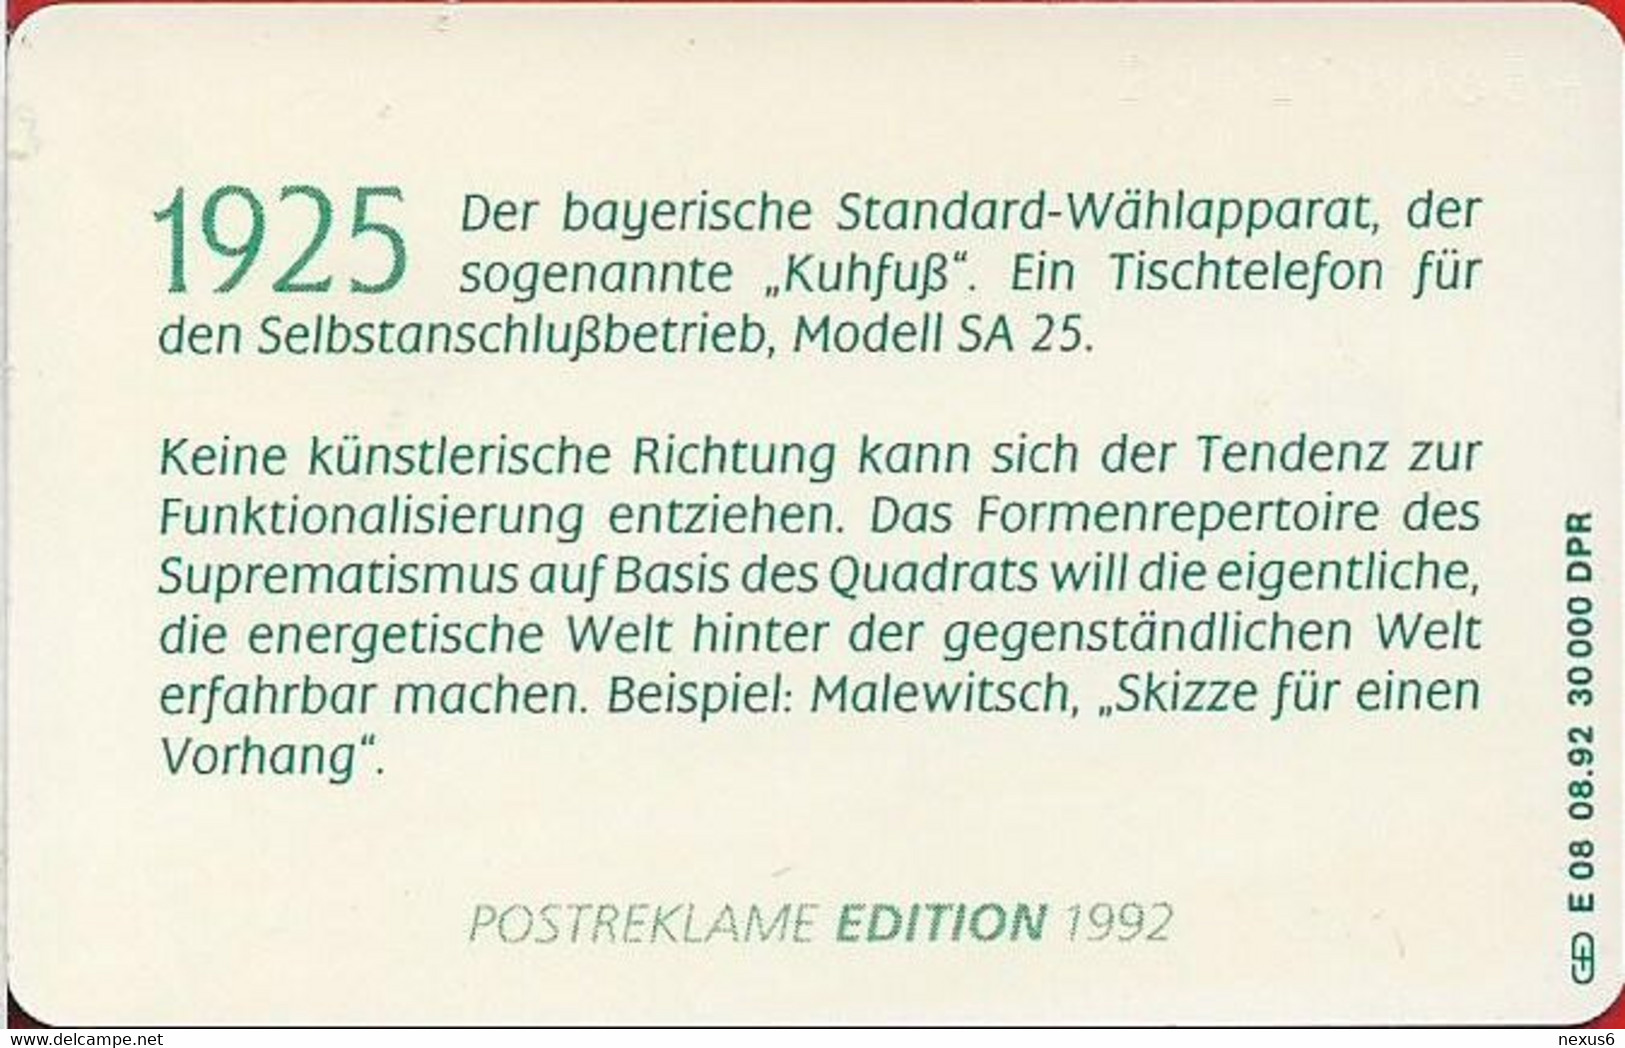 Germany - Alte Telefonapparate 4 - Standardwählapparat Kuhfuß (1925) E08 08.92 - 12DM-40Units, 30.000ex, Mint - E-Series: Editionsausgabe Der Dt. Postreklame